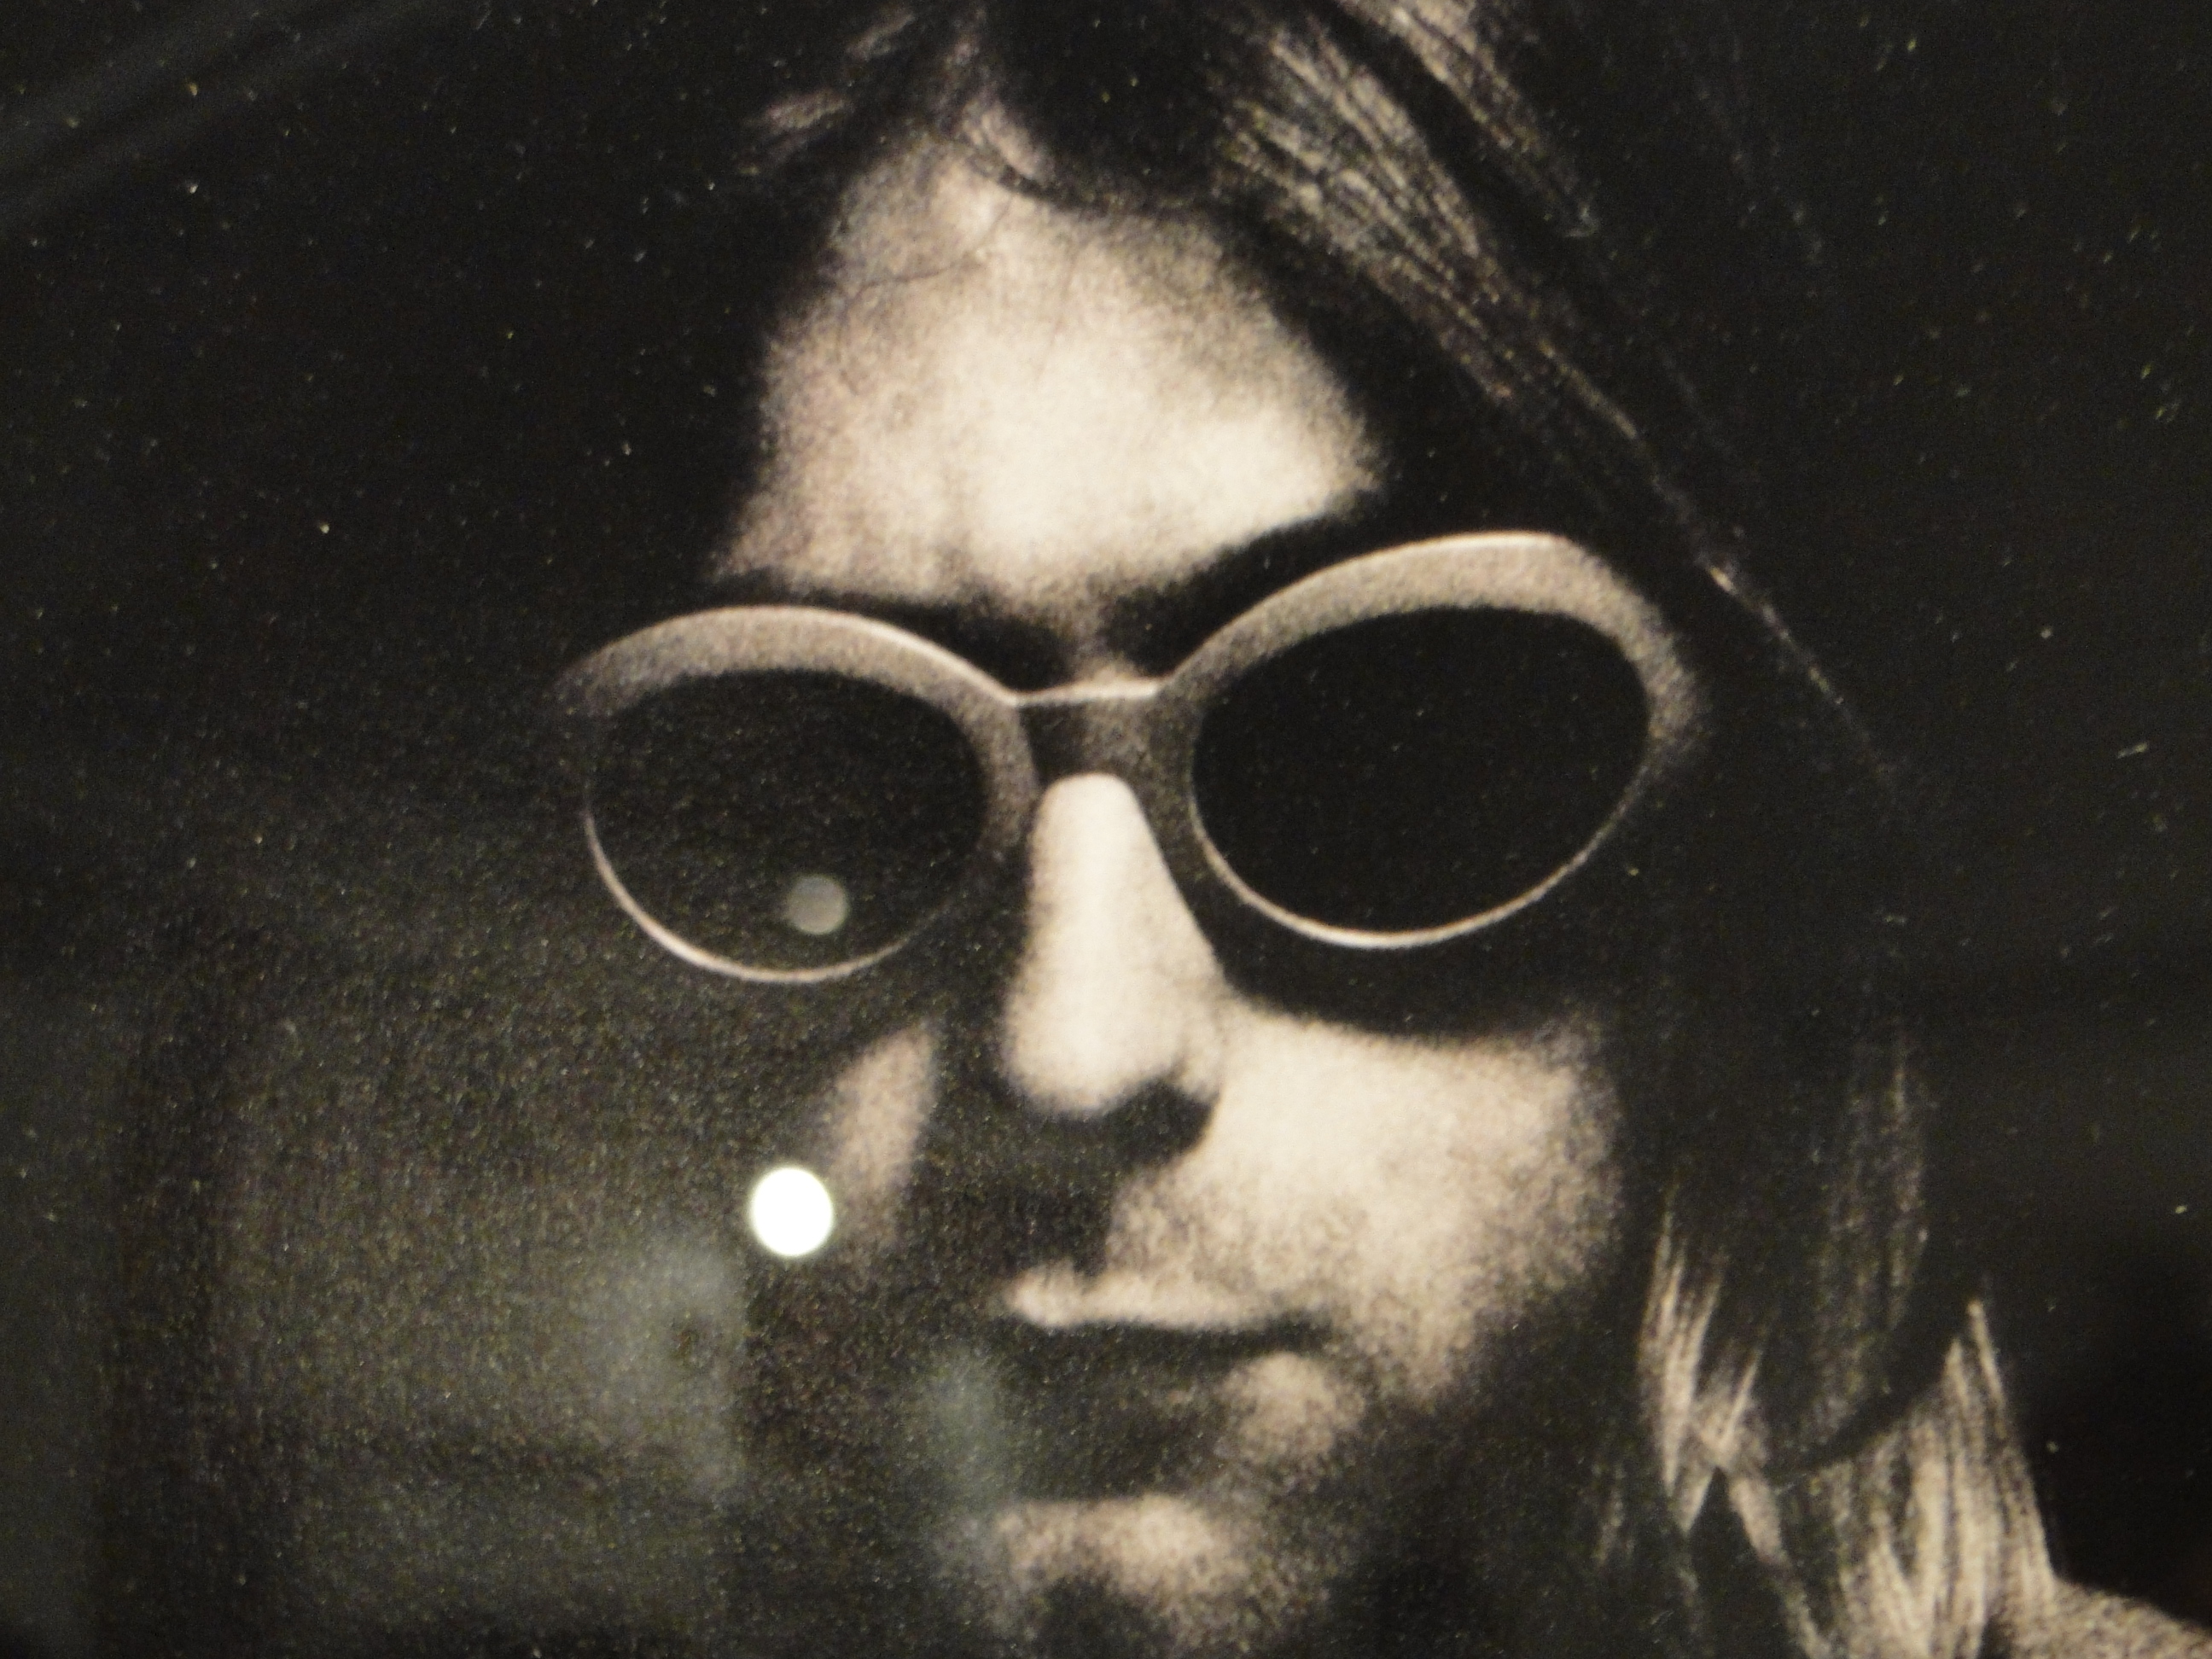 THE LAST SHOOTING - Exposition Kurt Cobain - Paris